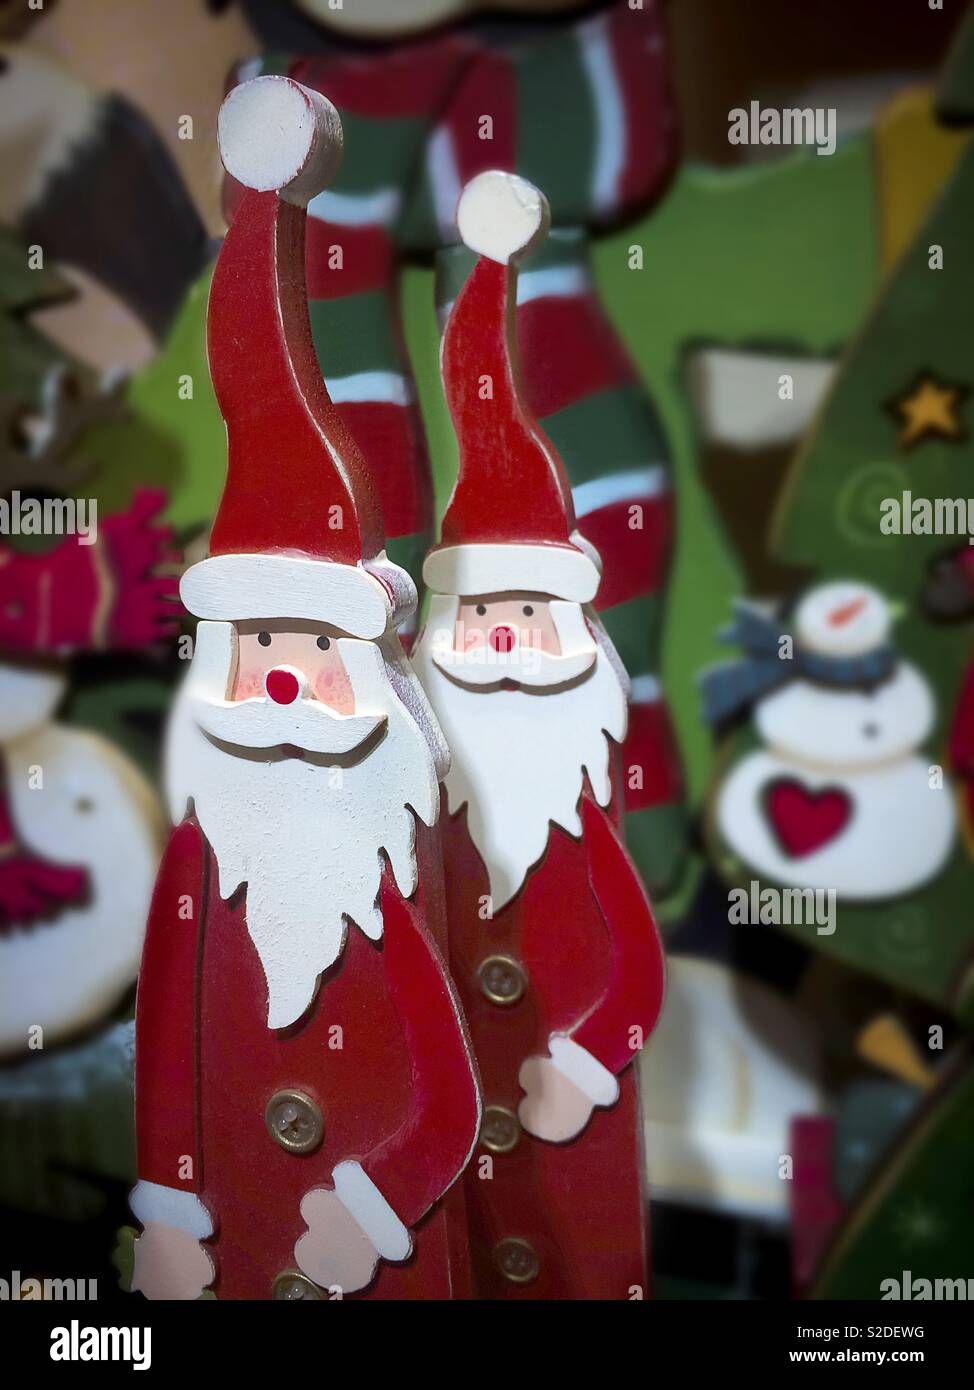 Santa Figuren Weihnachten Dekoration Stockfoto